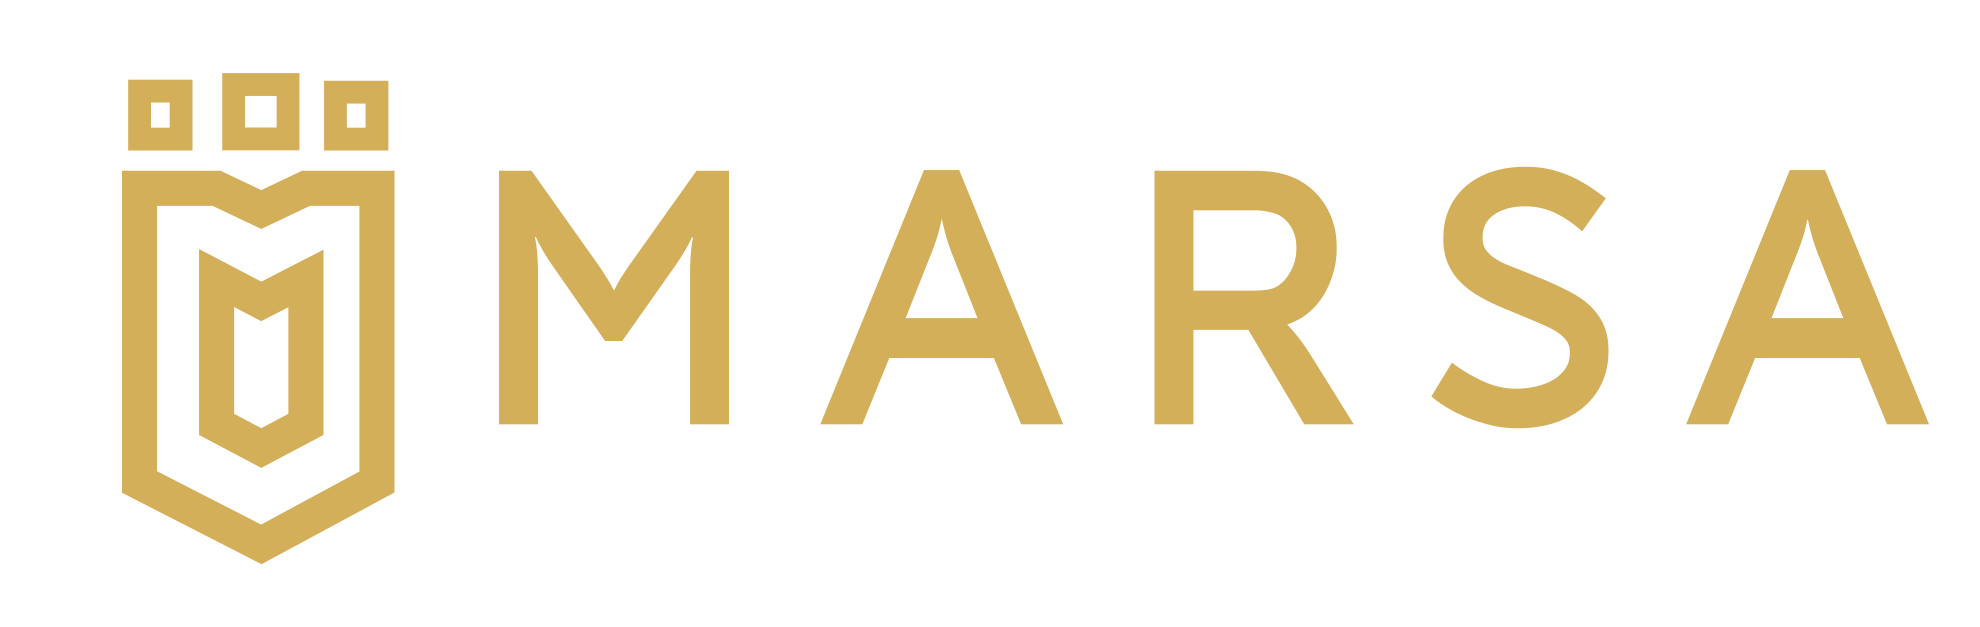 Marsa